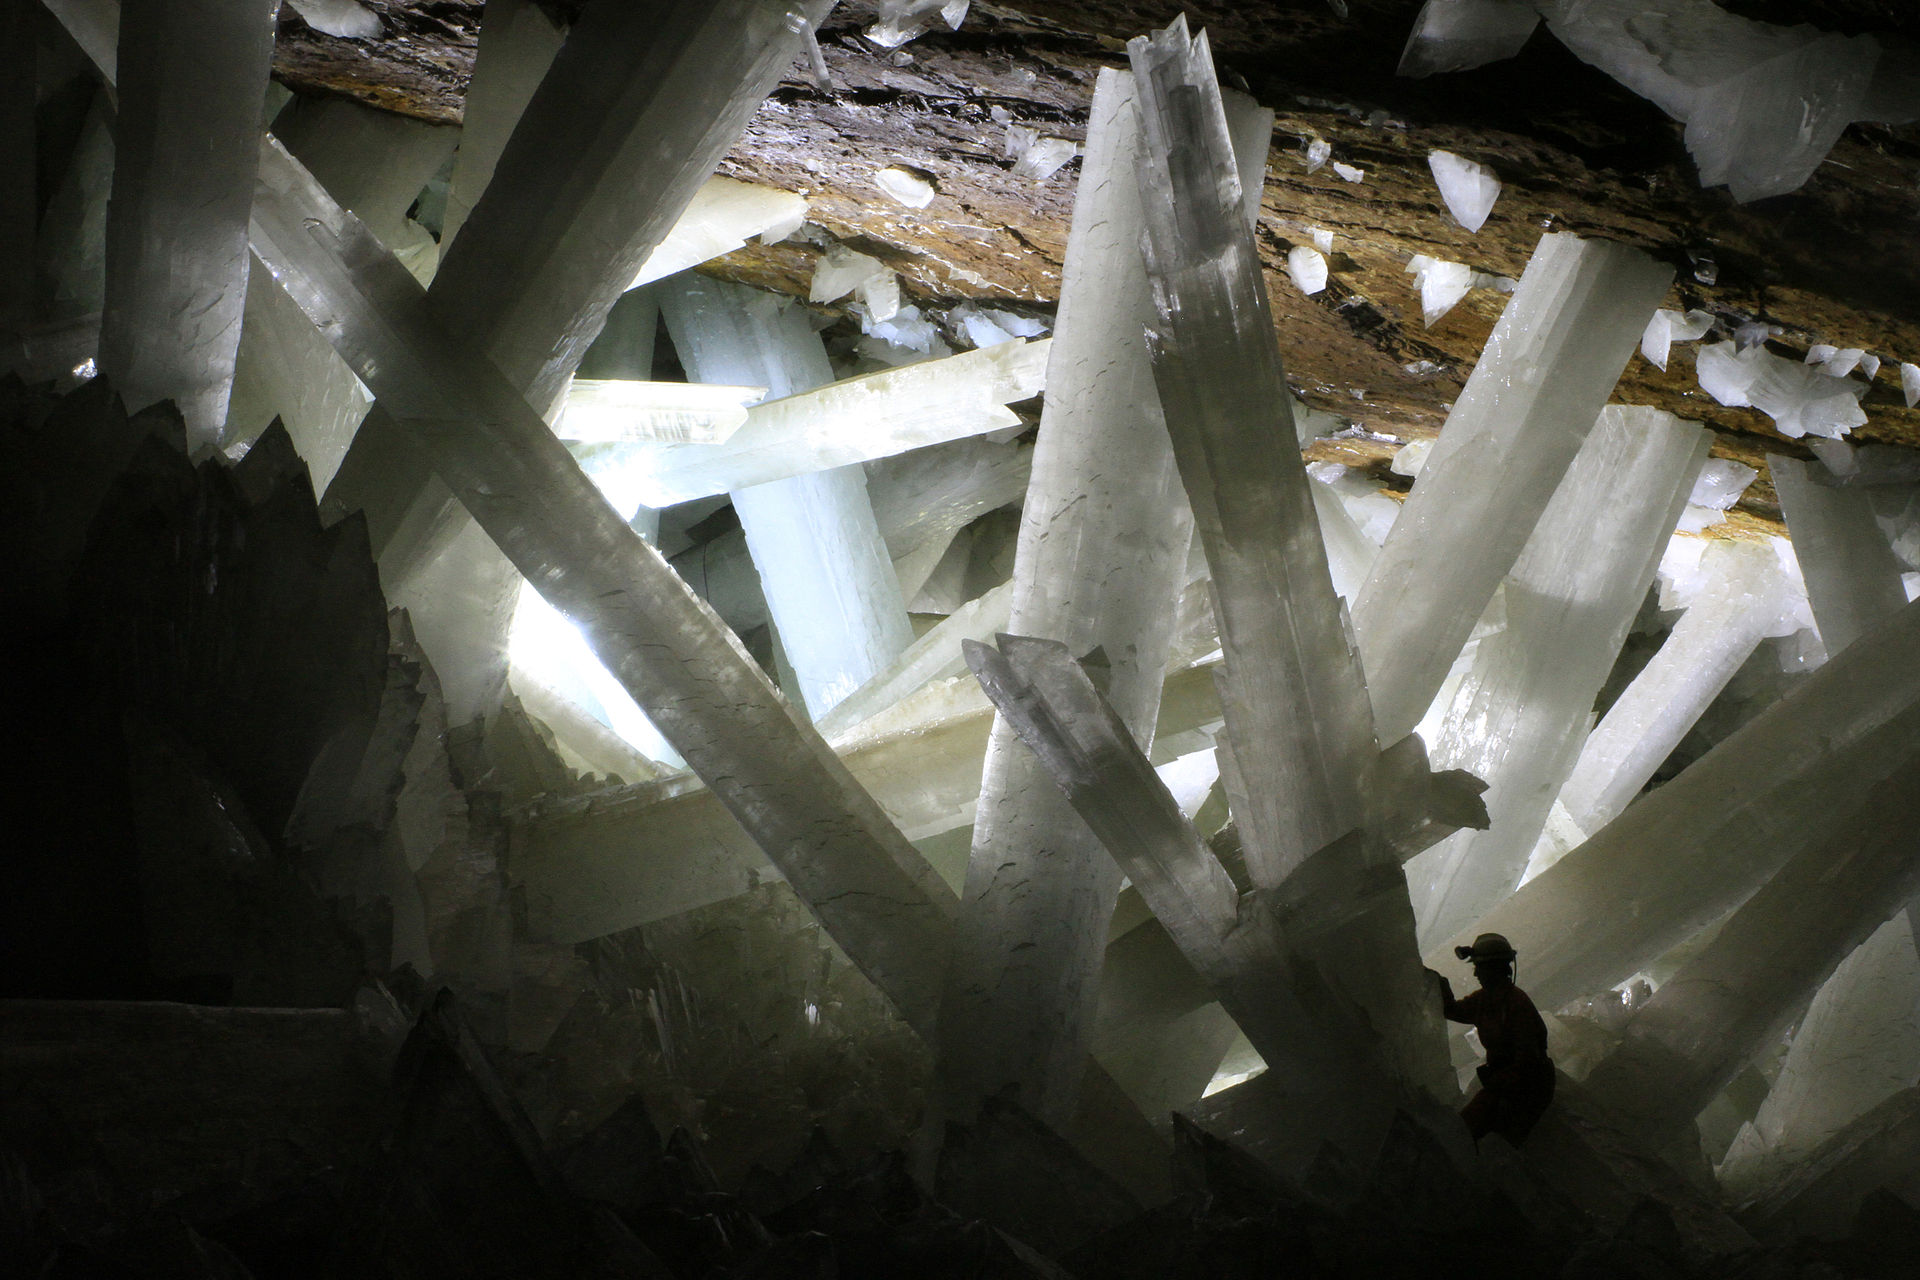 https://en.wikipedia.org/wiki/Cave_of_the_Crystals#/media/File:Cristales_cueva_de_Naica.JPG